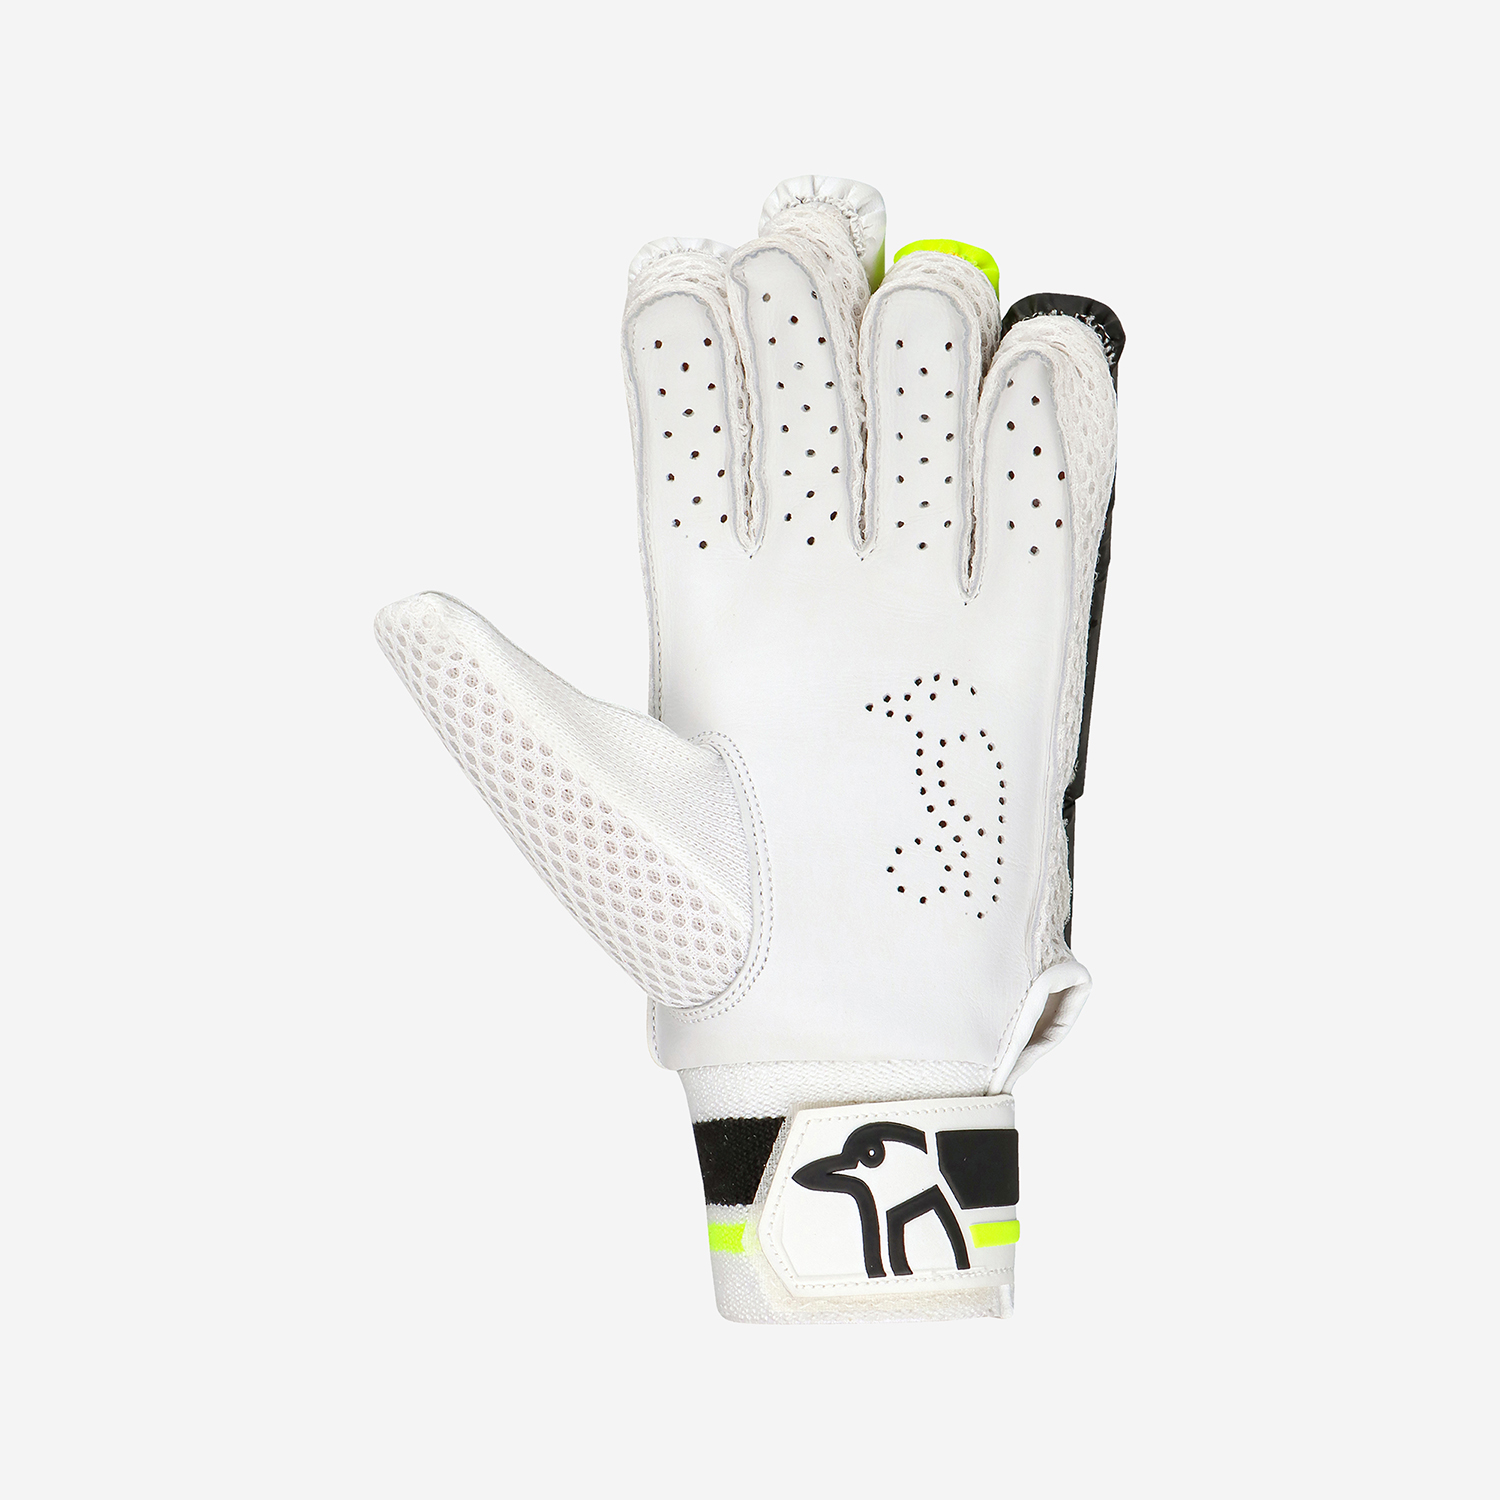 Pro 6.0 Beast Batting Gloves